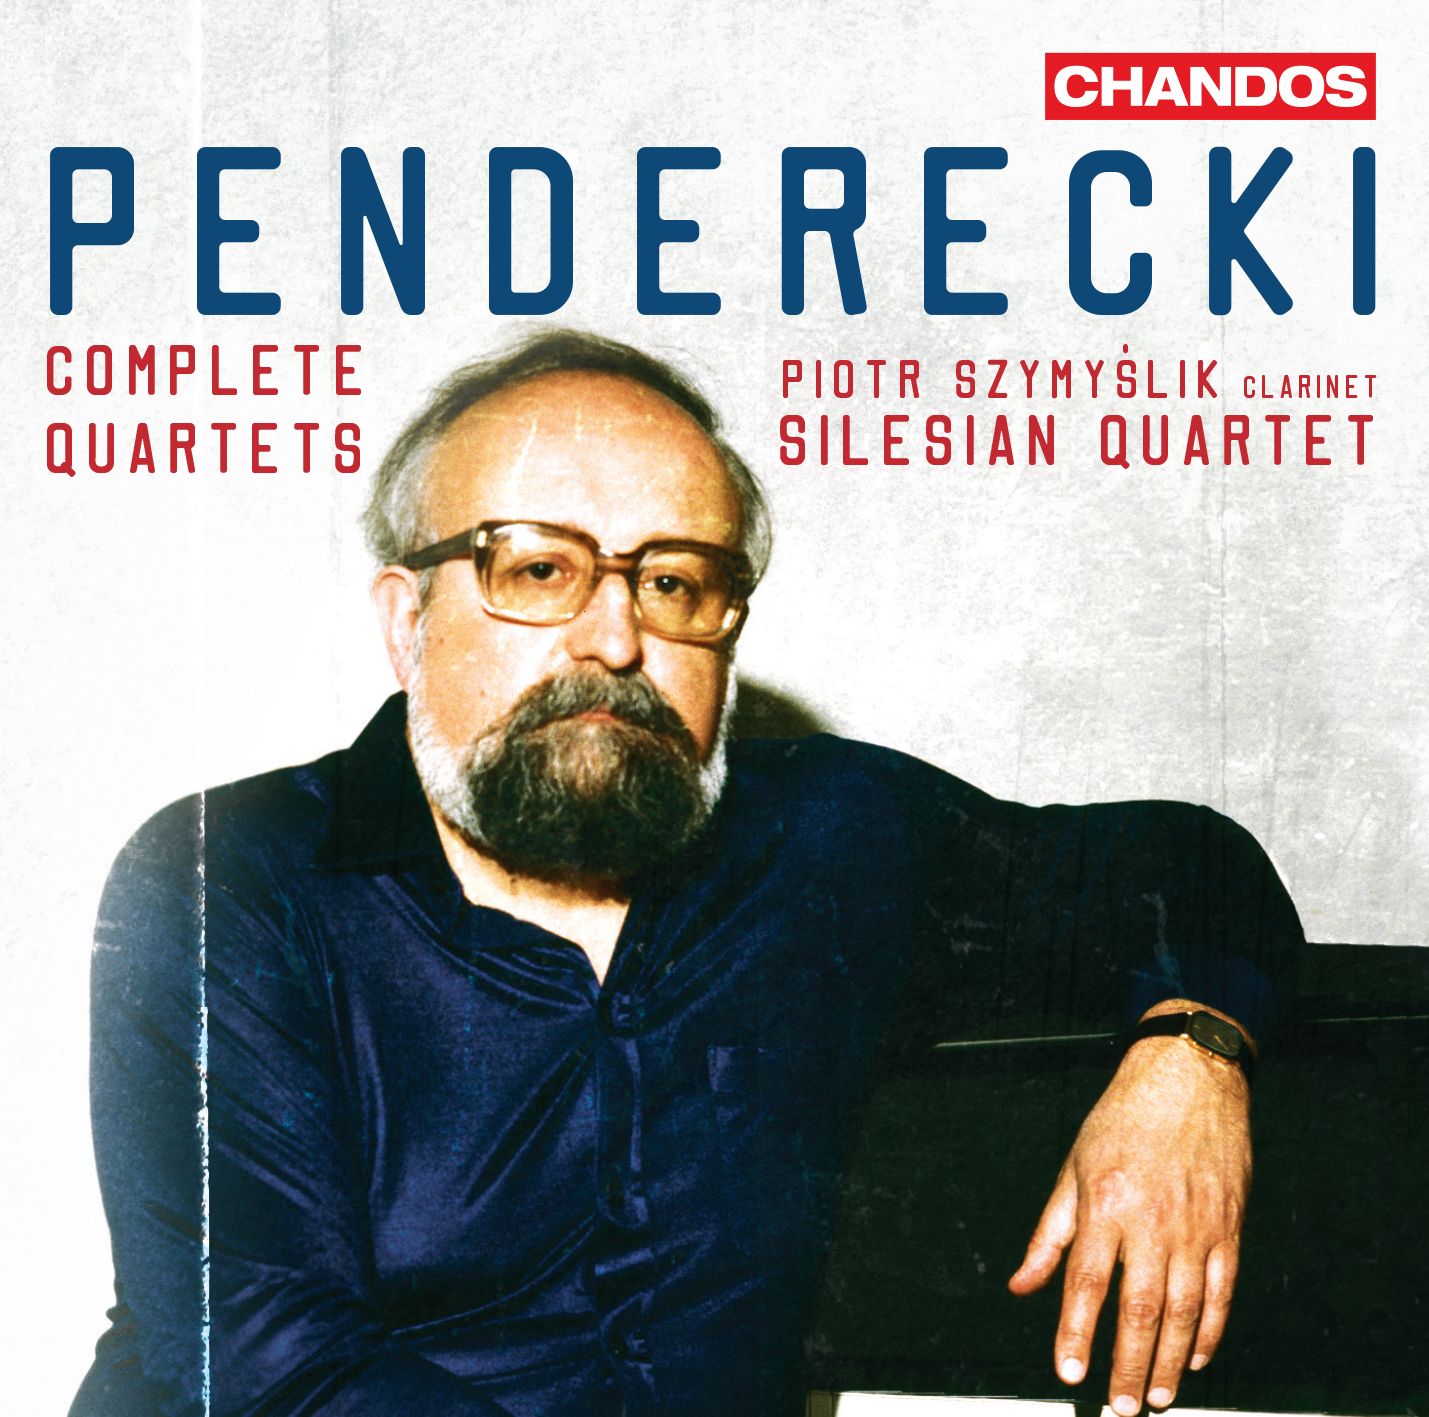 Penderecki: Complete Quartets on Chandos